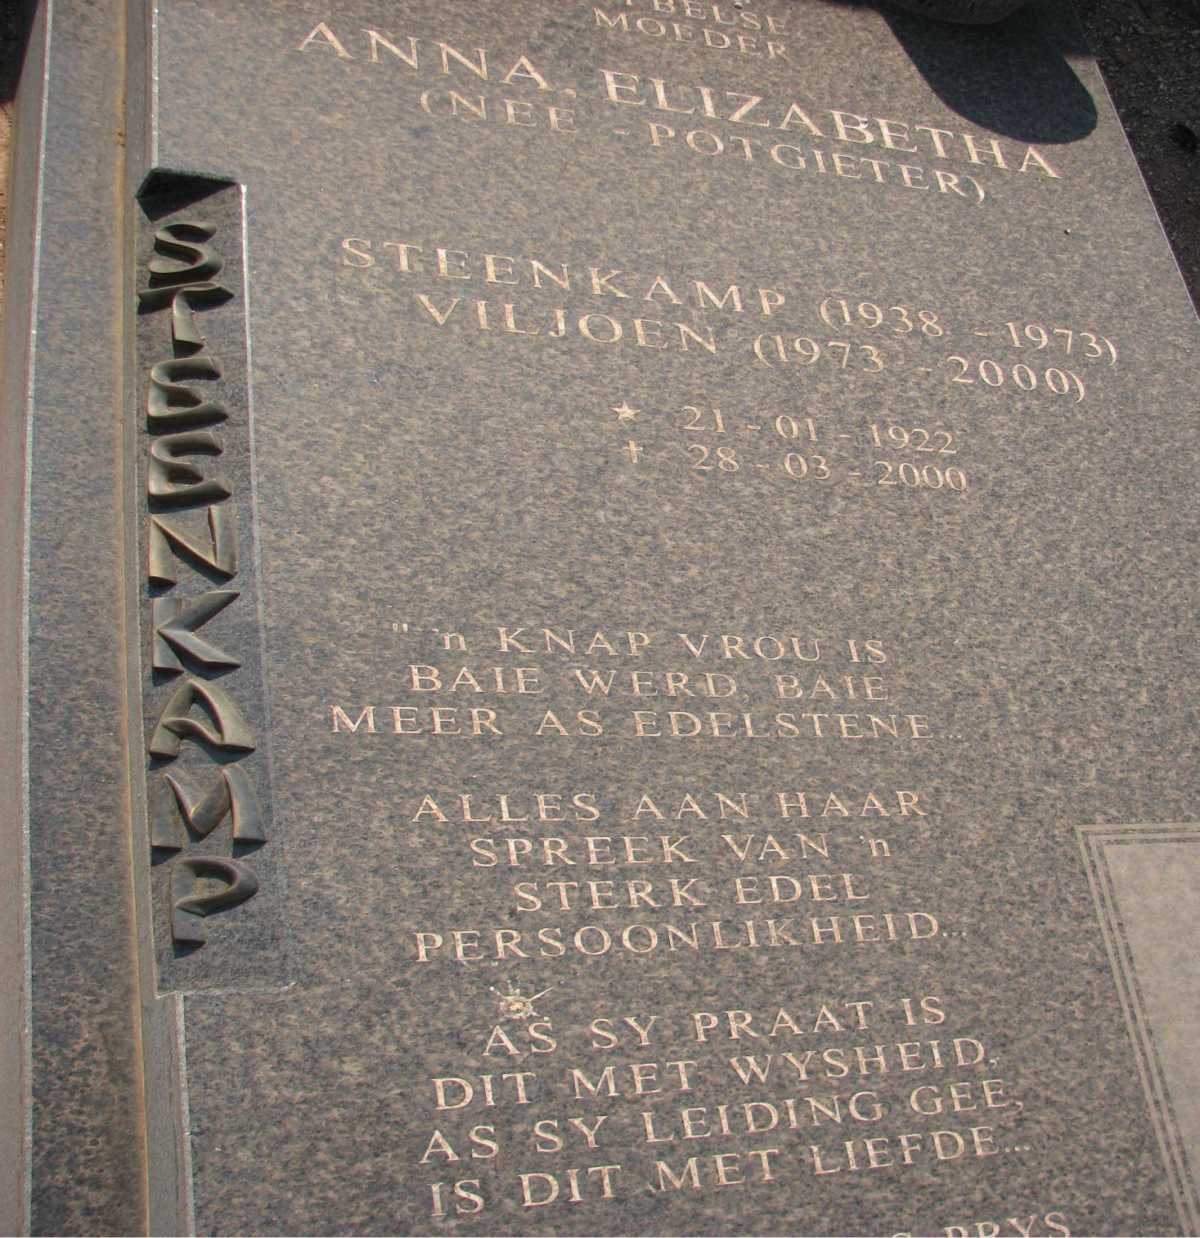 VILJOEN Anna Elizabeth previously STEENKAMP nee POTGIETER 1922-2000